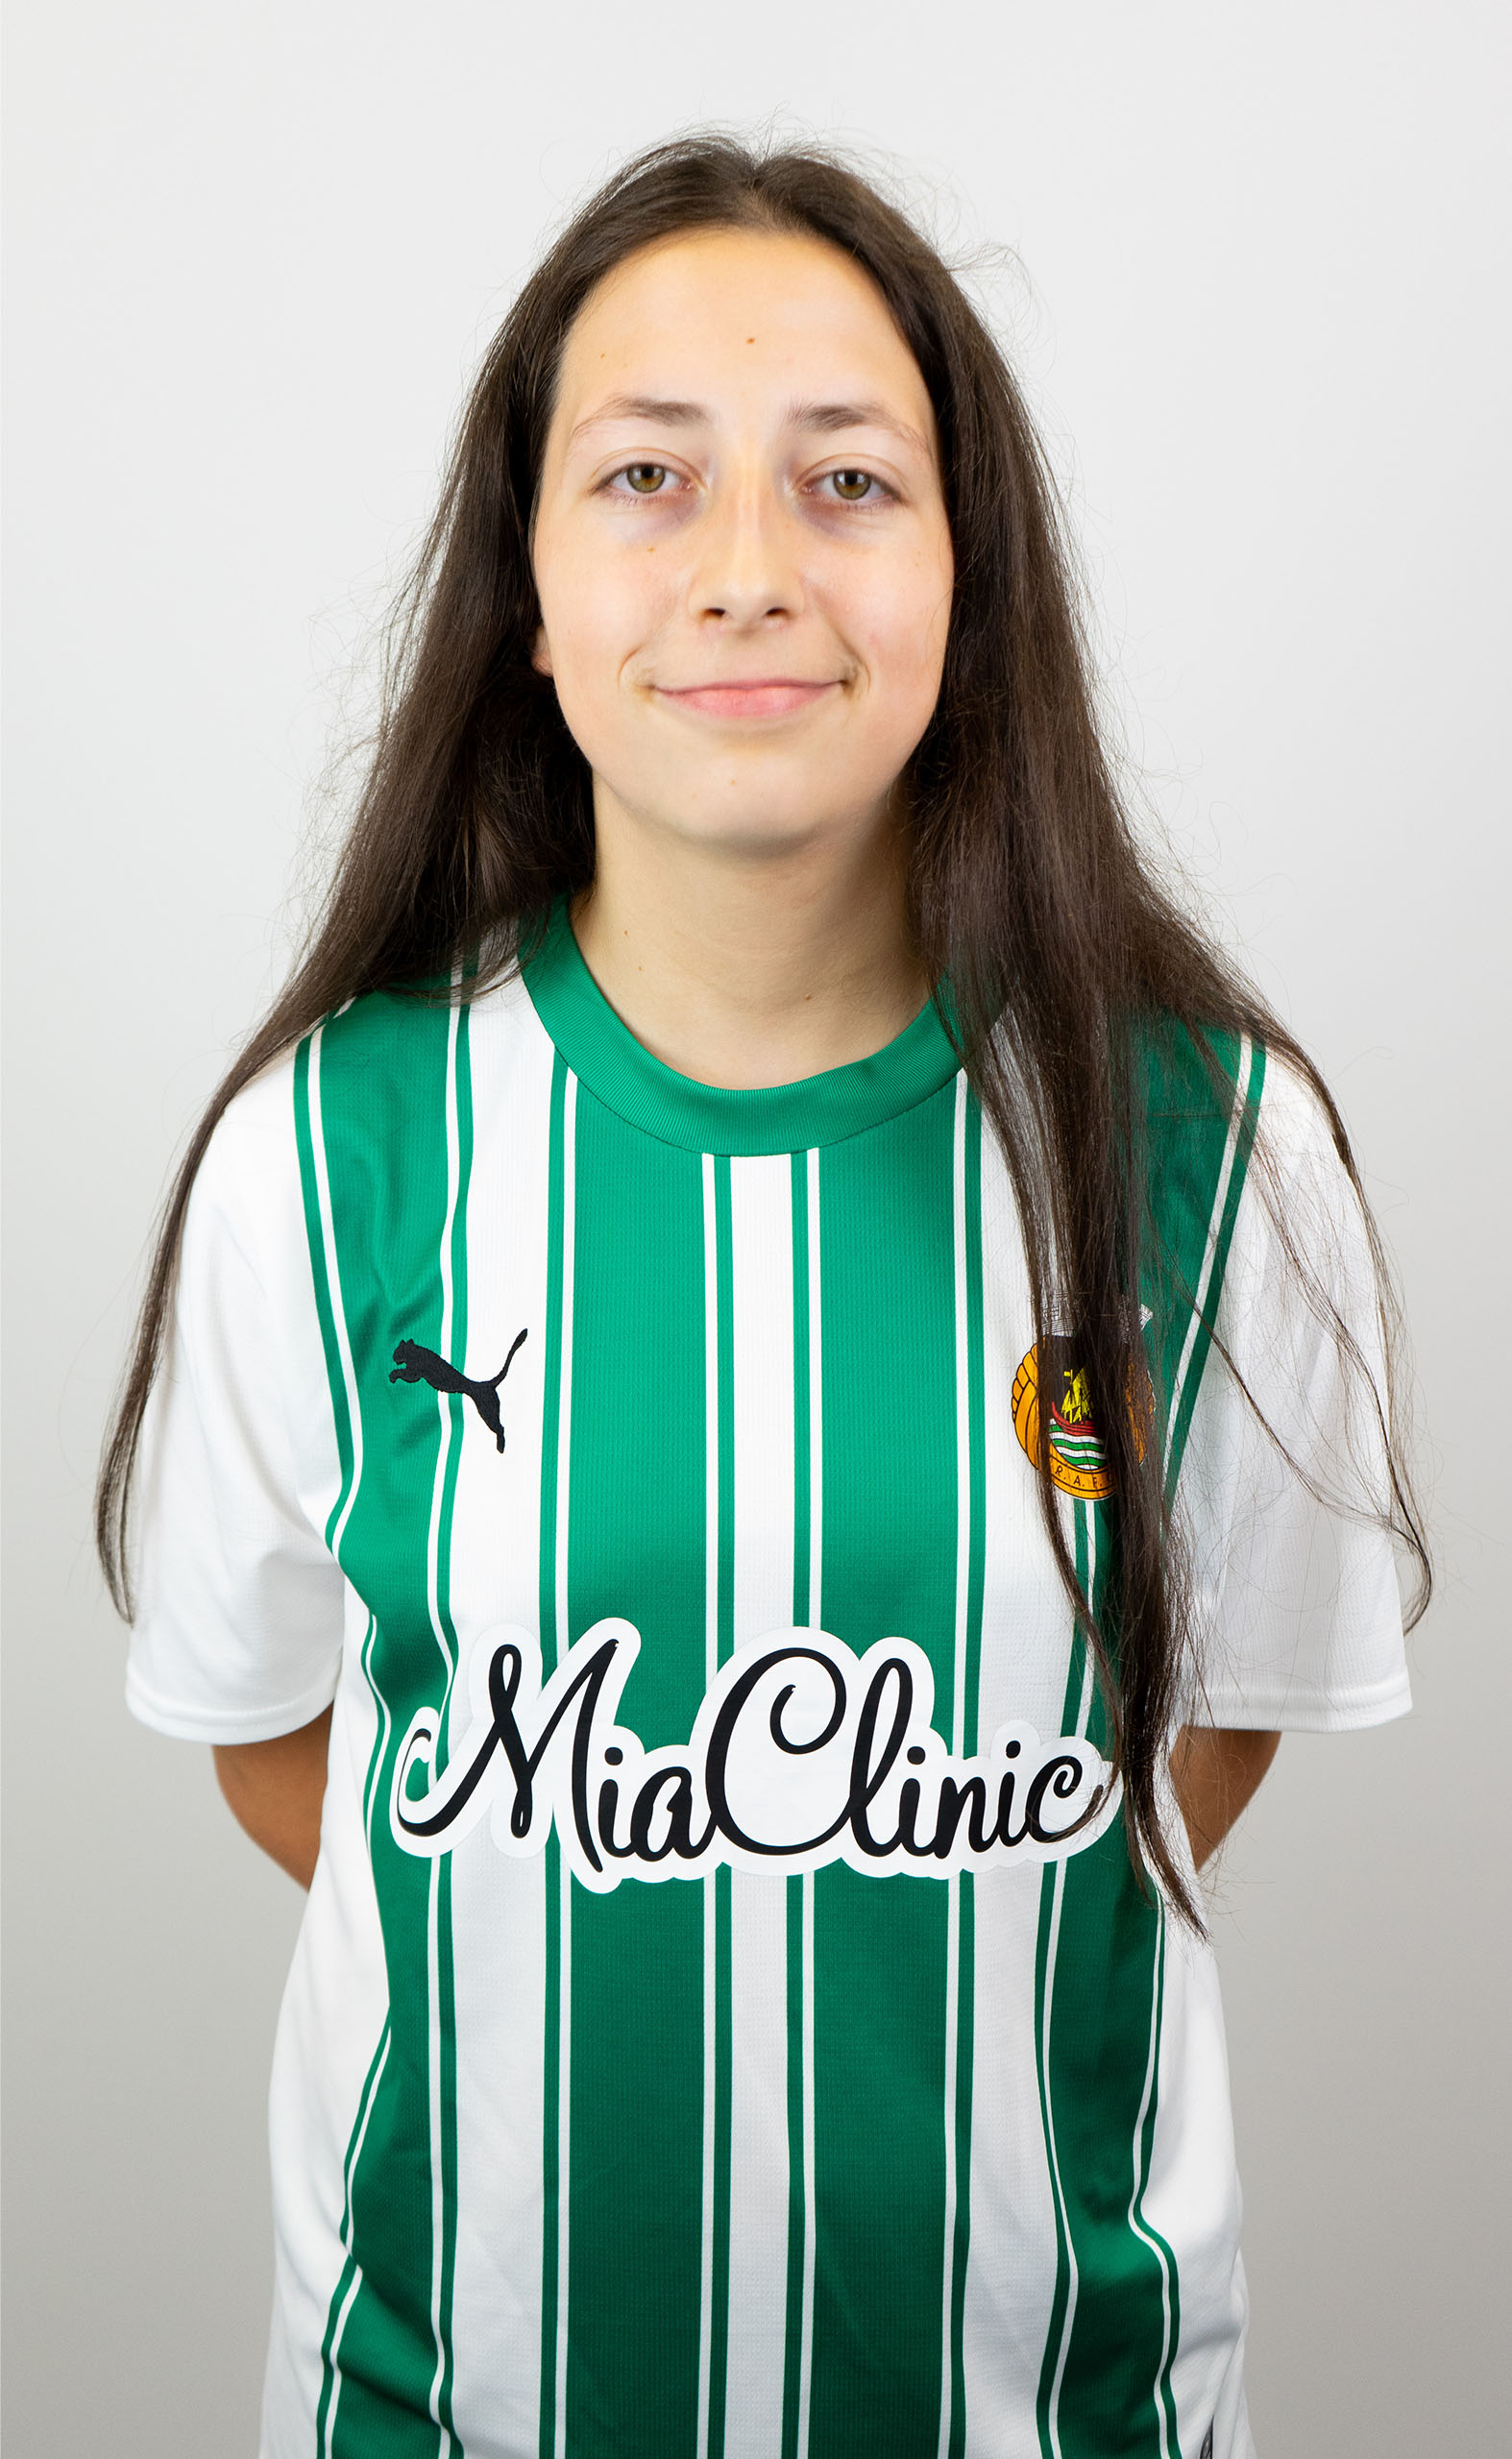 Leonor Futebol Clube